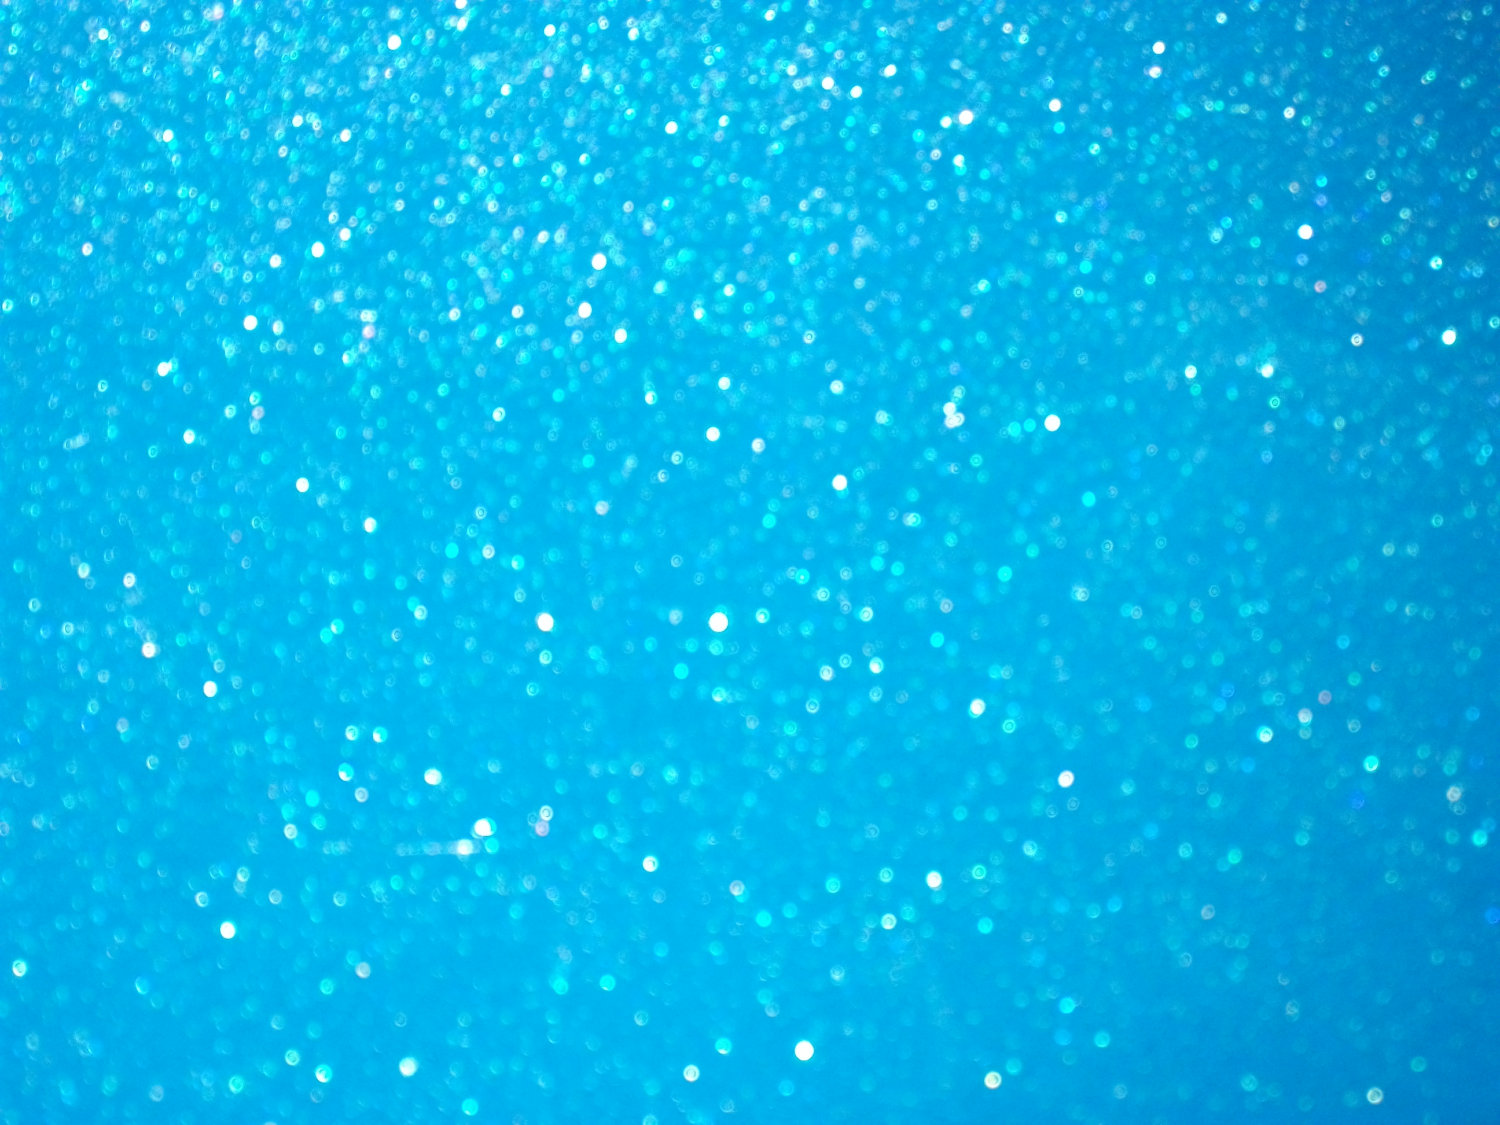 Self Adhesive Glitter Paper TurquoiseAqua by mightymadgescloset 1500x1125